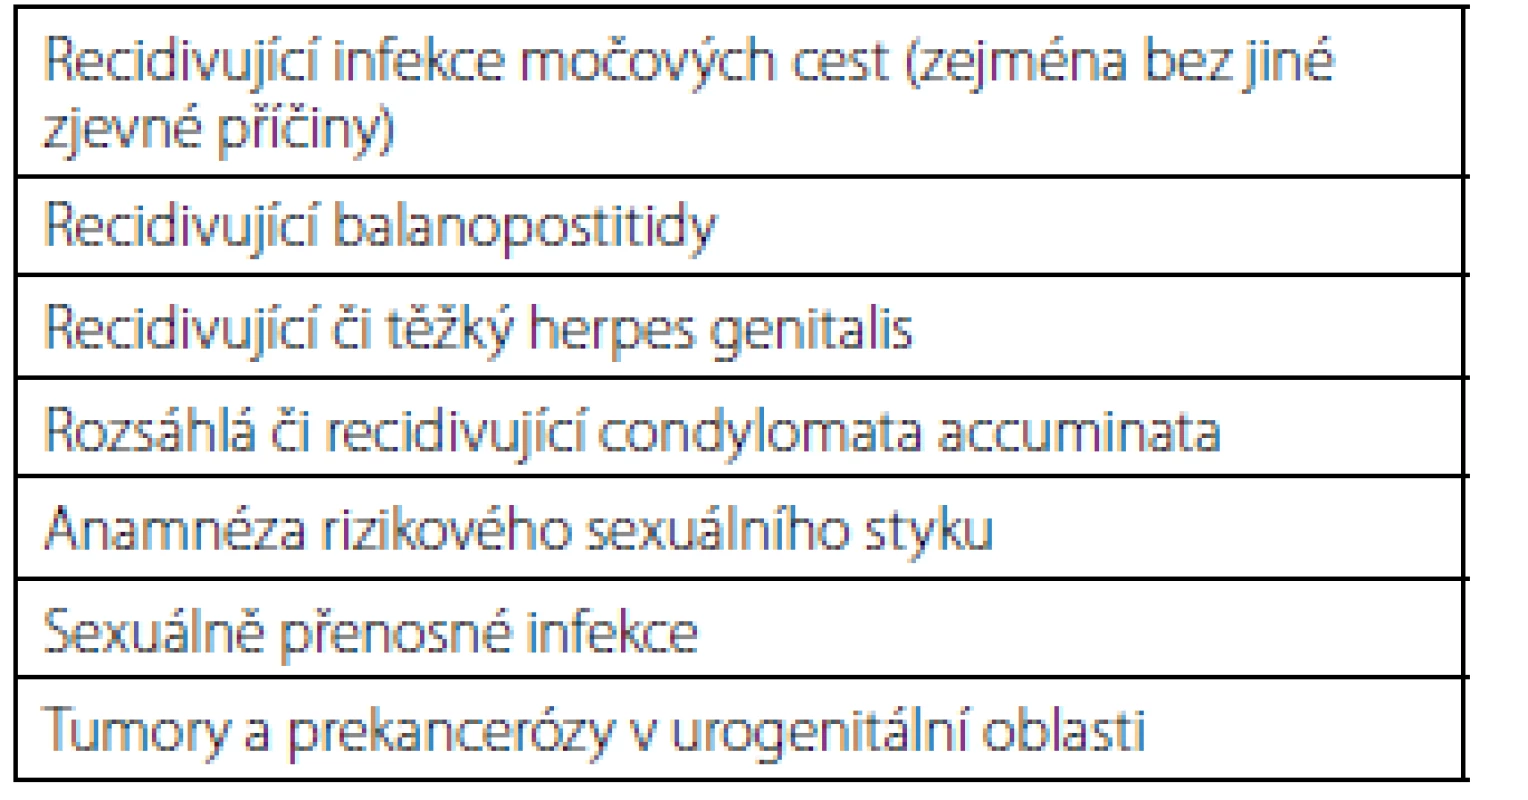 &lt;i&gt;Některé indikace k provedení HIV testu u urologických pacientů (upraveno dle 8)&lt;/i&gt;
Table 3. &lt;i&gt;Some indications for HIV testing in urological patients (adapted from 8)&lt;/i&gt;